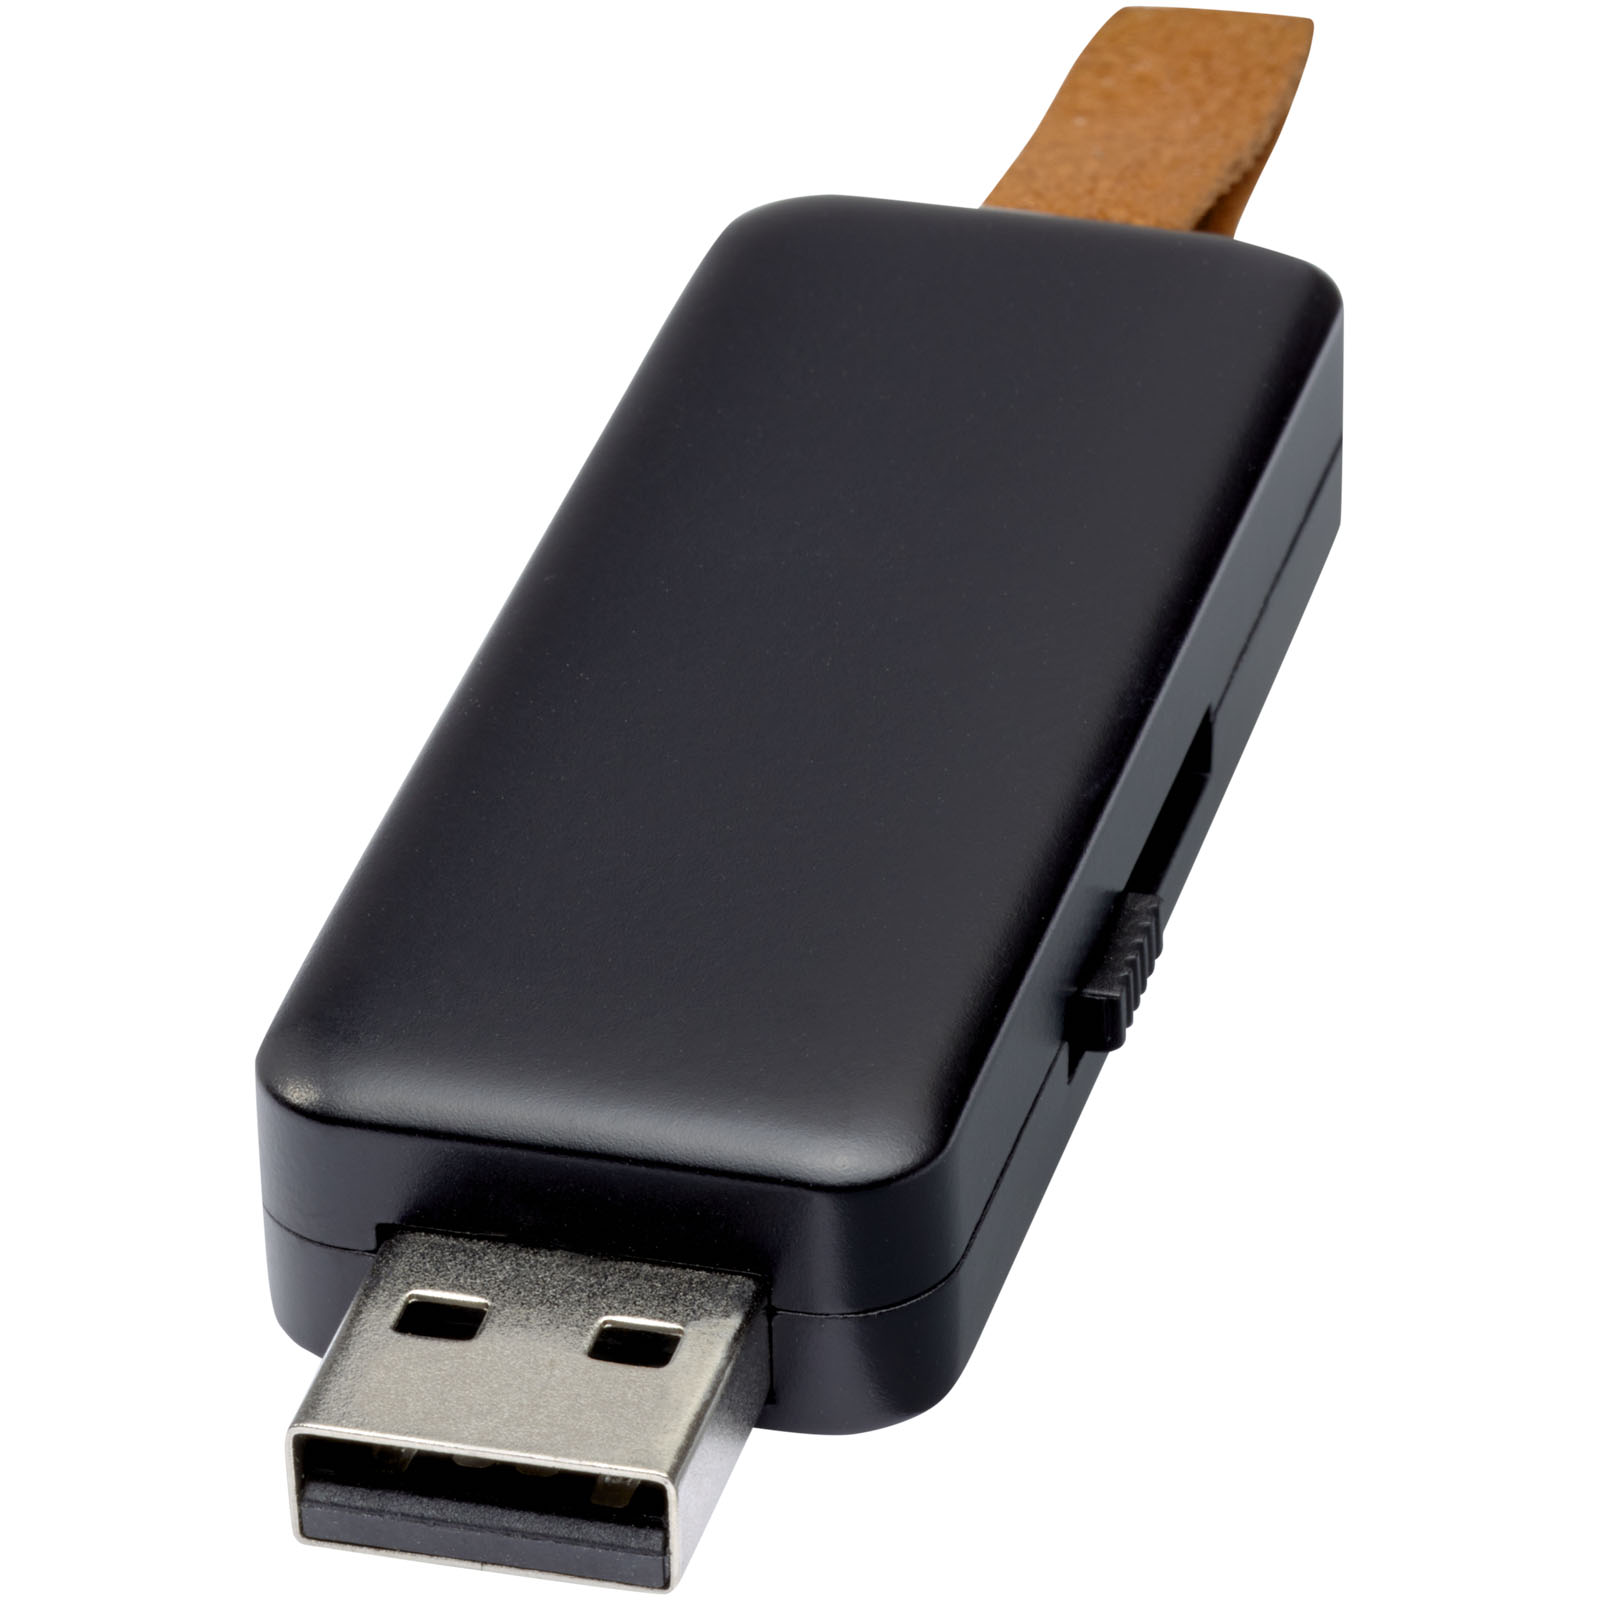 Technology - Gleam 16GB light-up USB flash drive